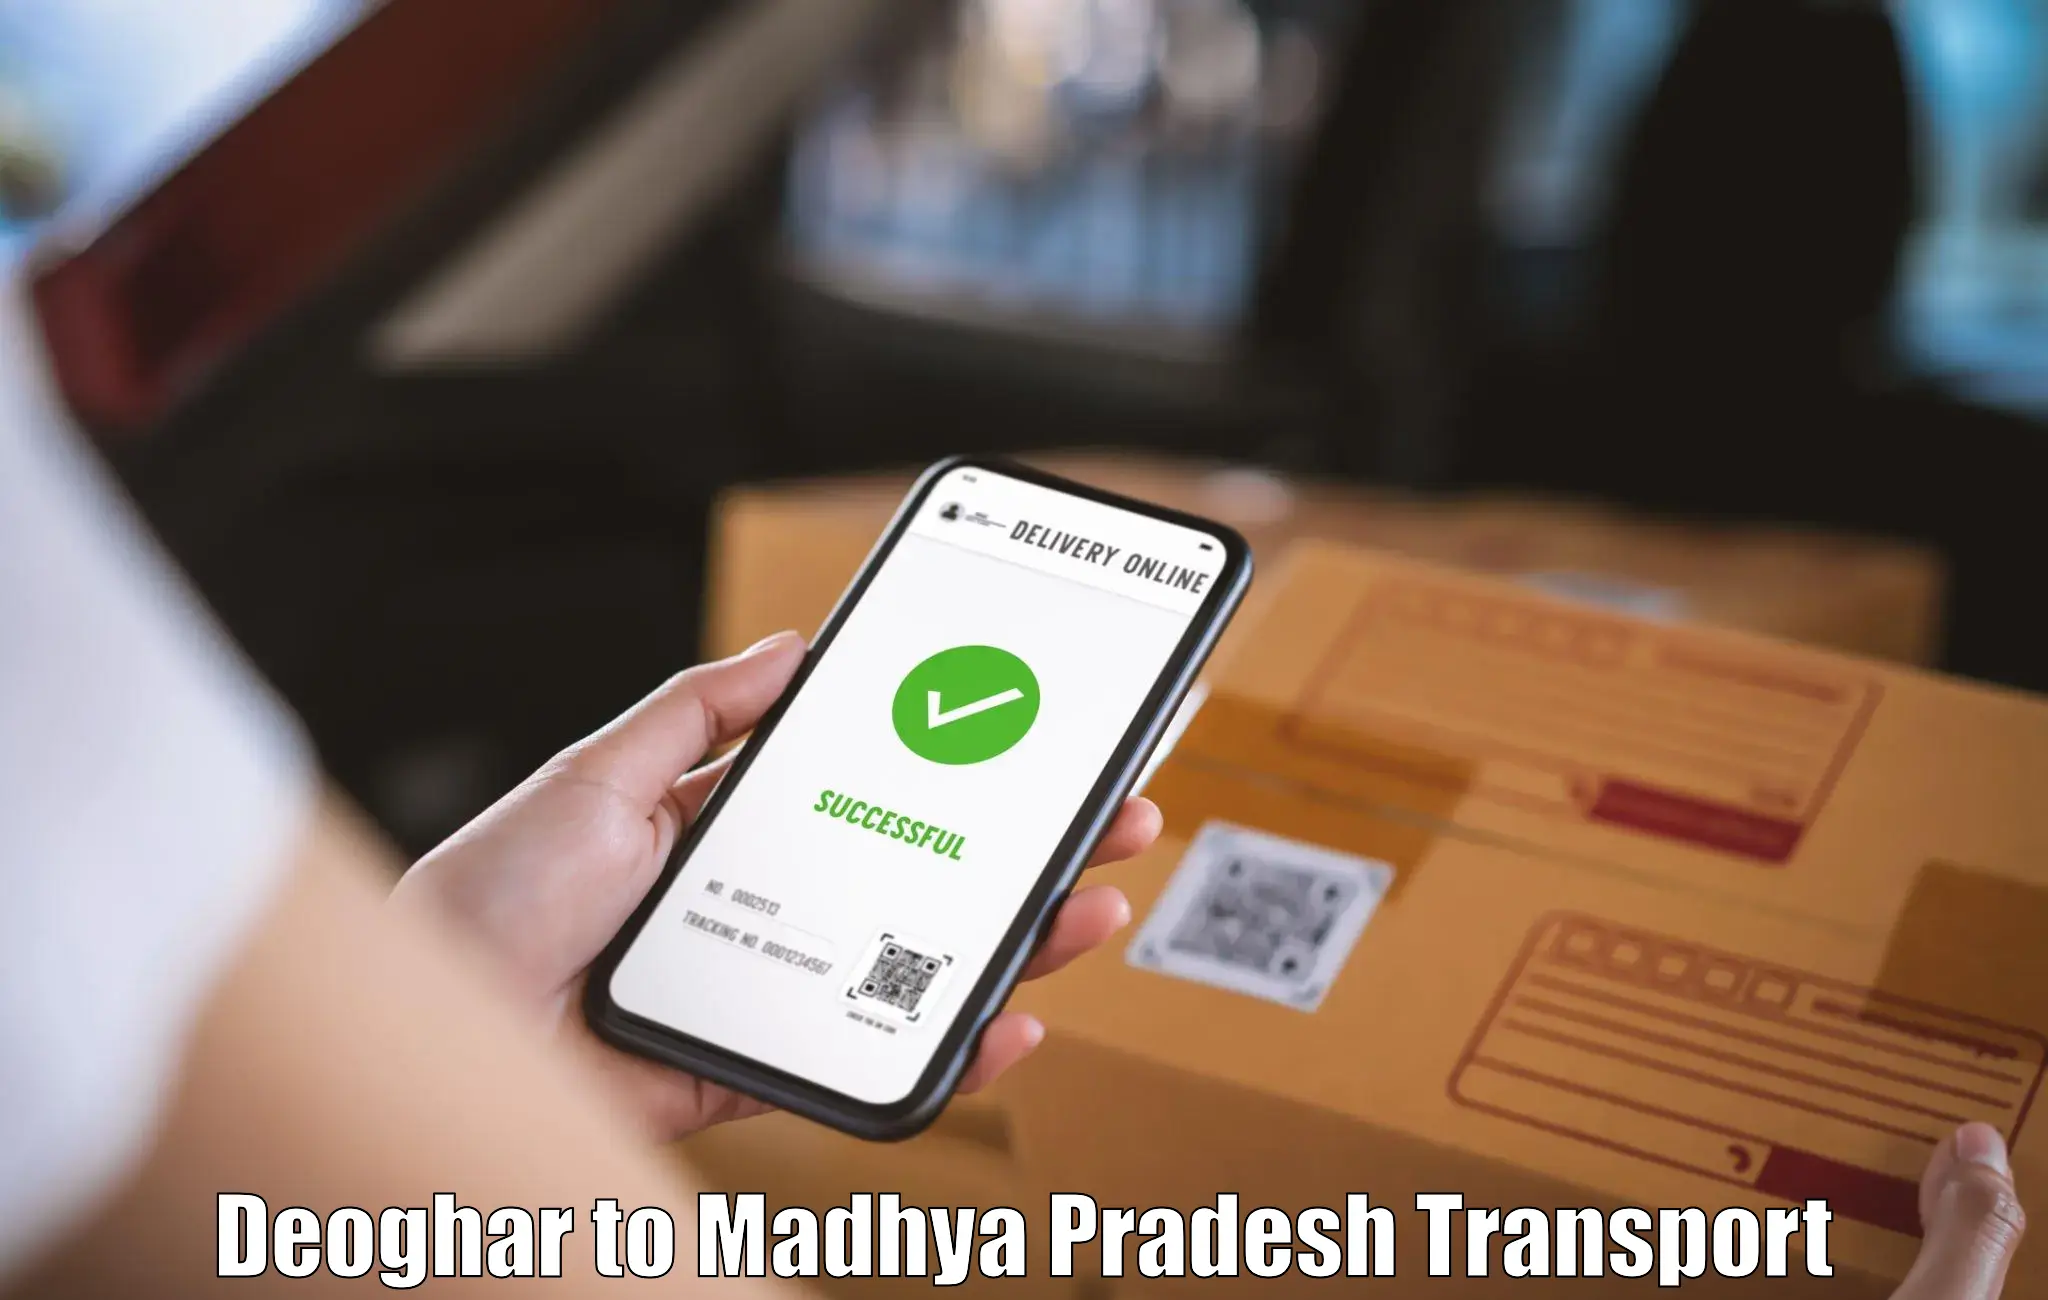 Transportation services Deoghar to Madhya Pradesh